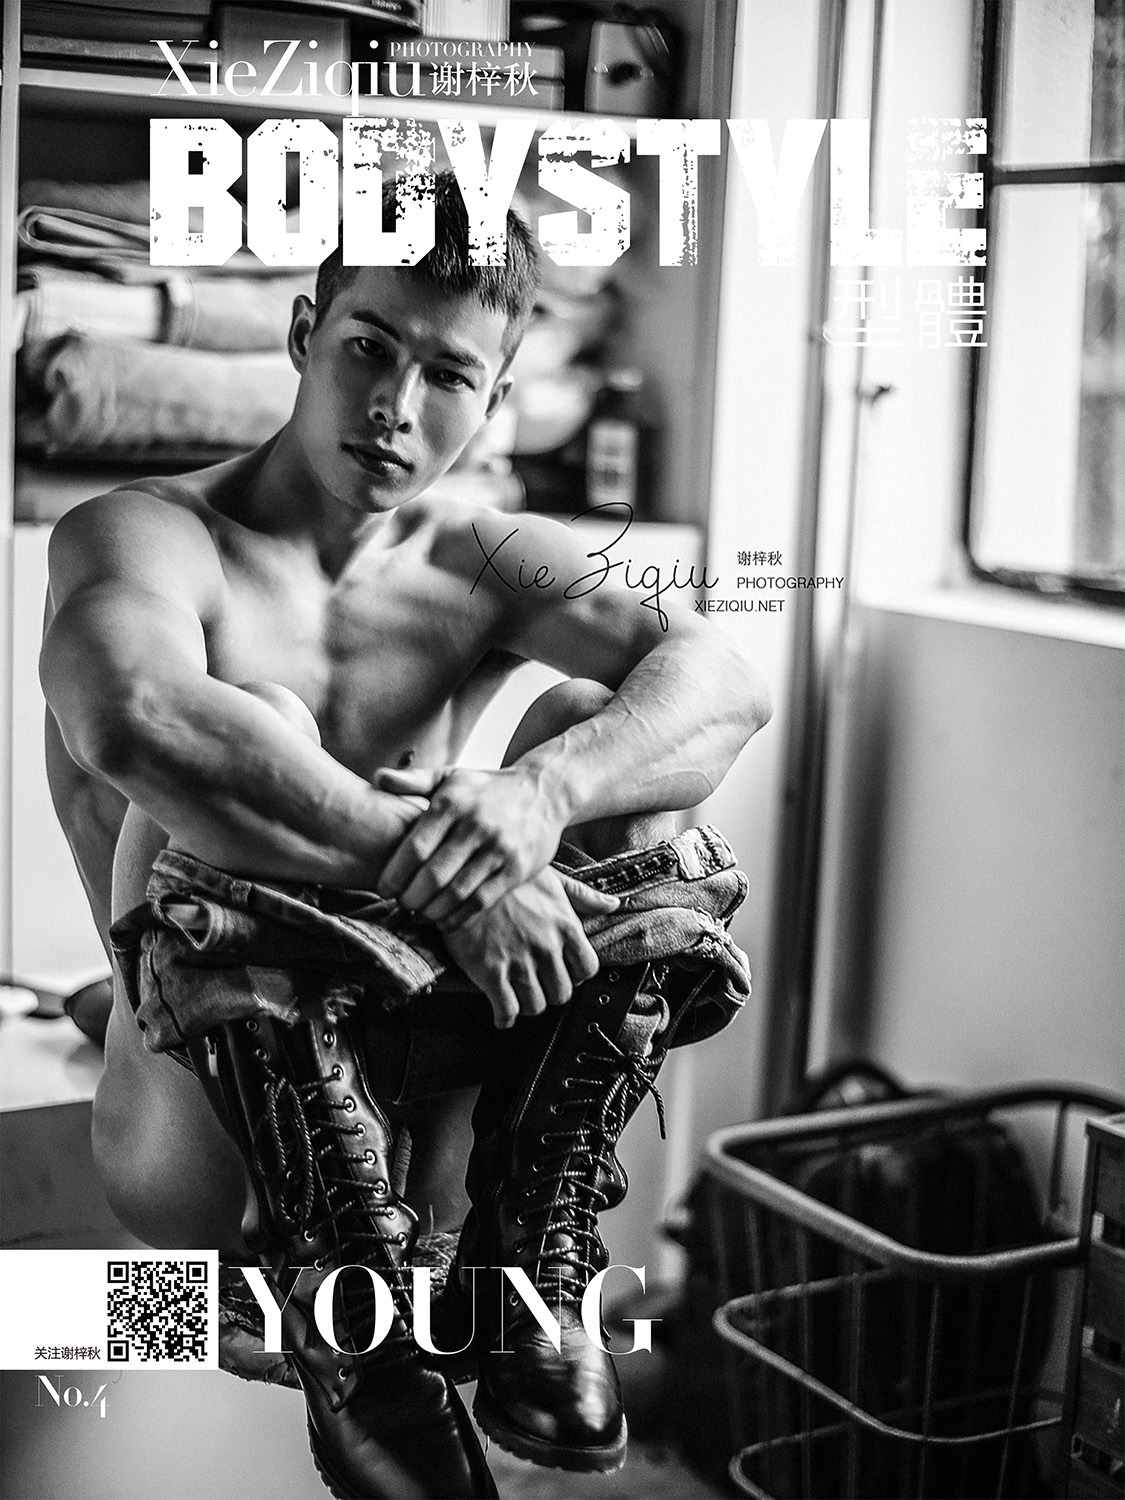 Body Style magazine #4